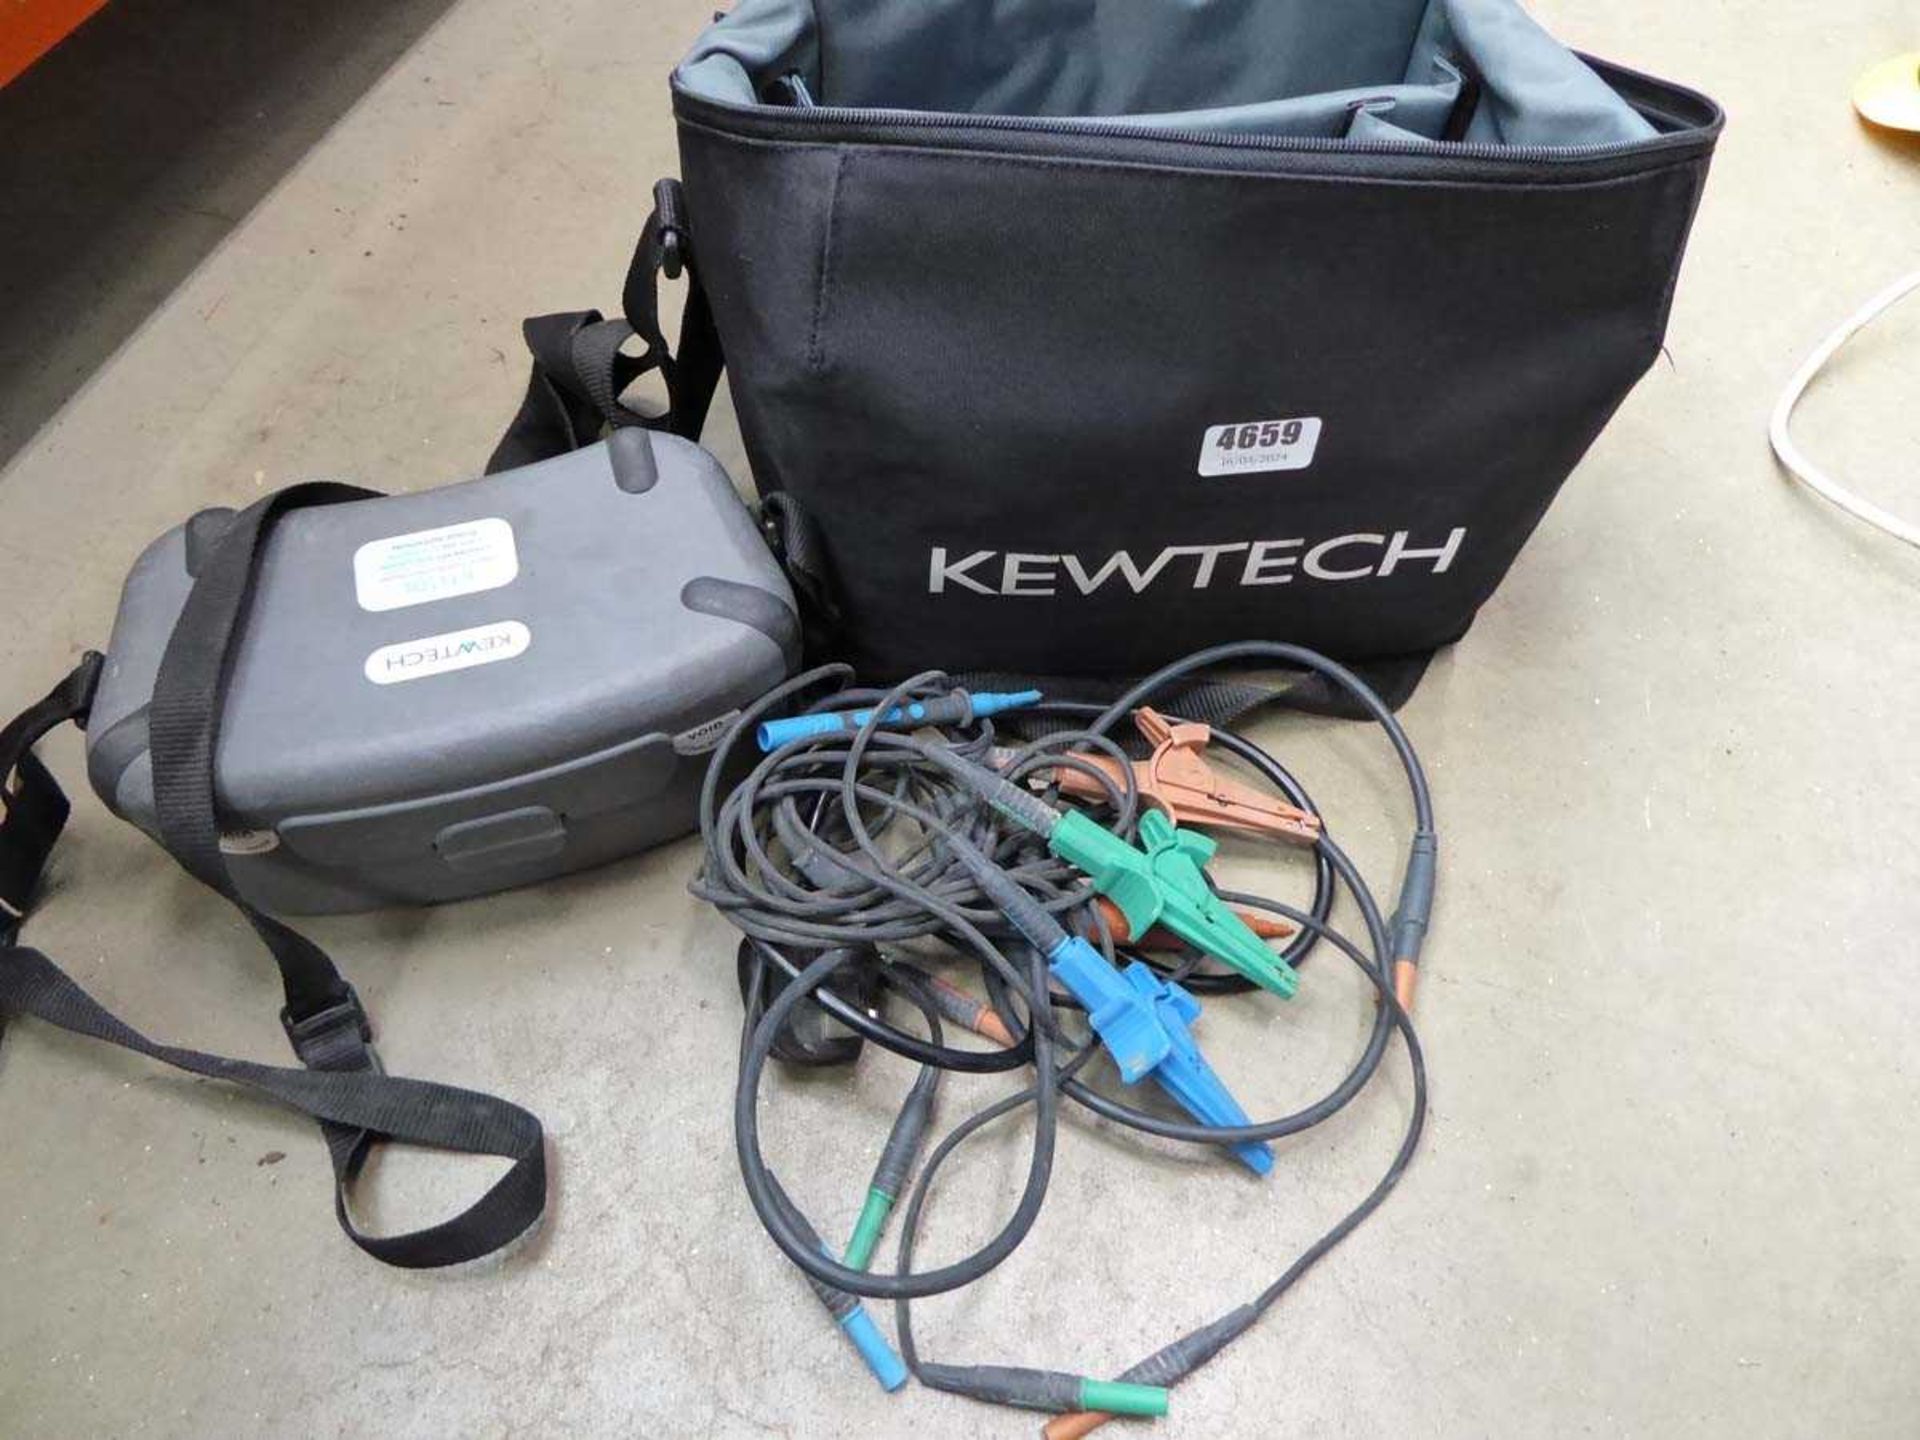 Kewtech electrical tester